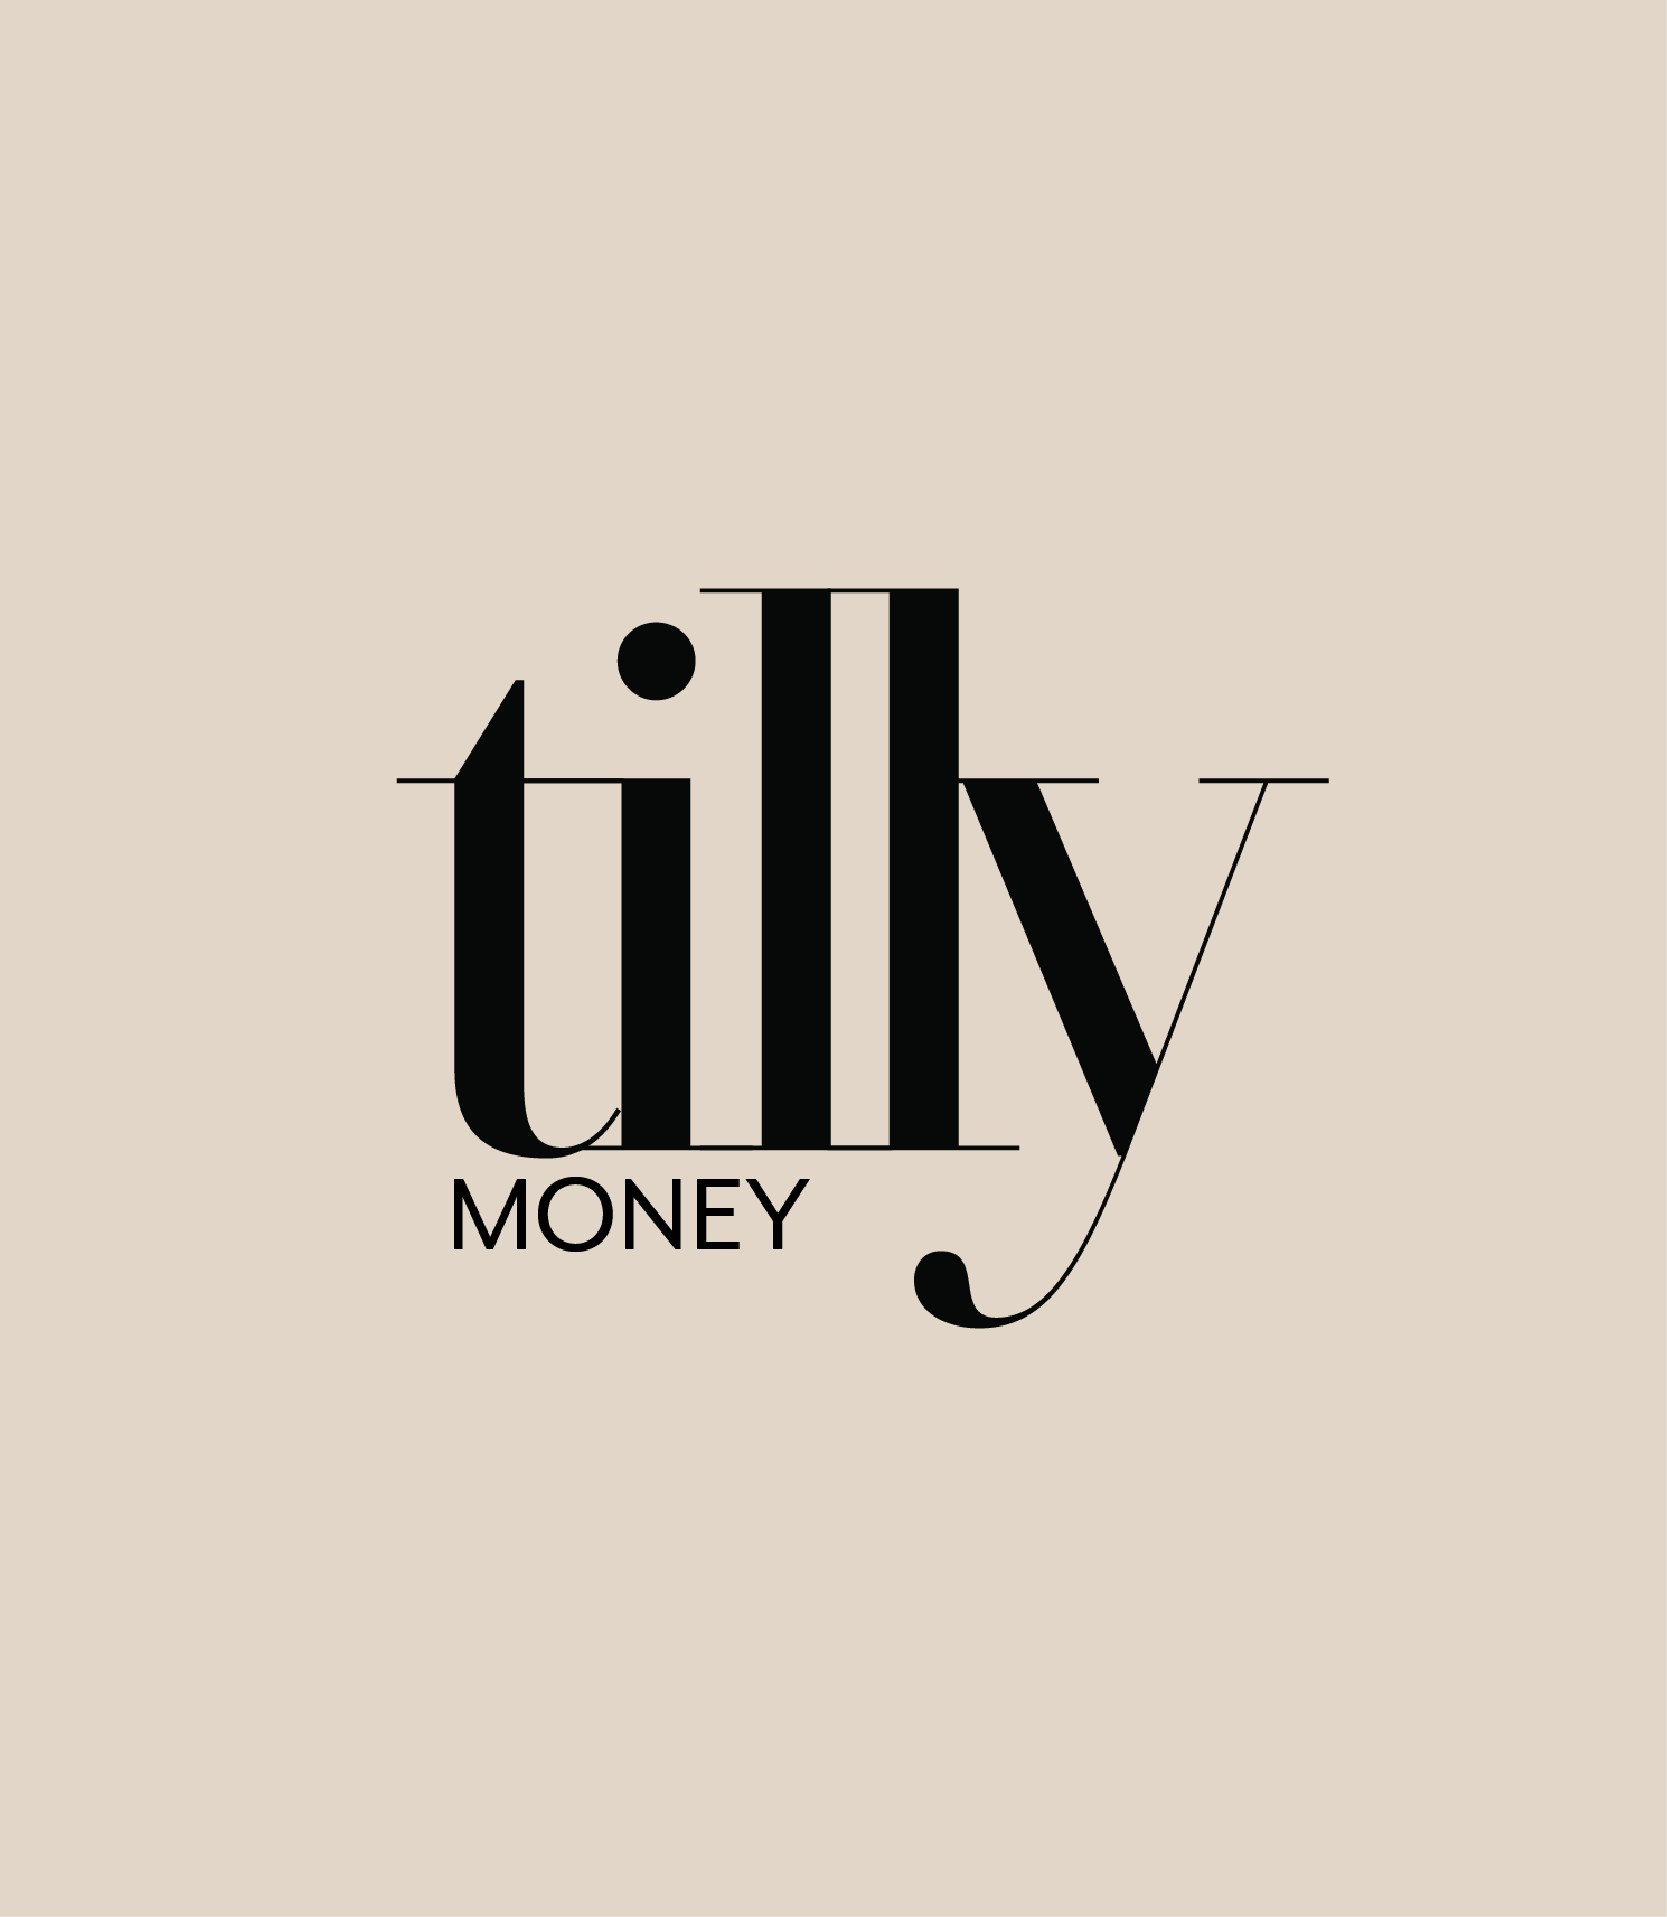 Tilly Money